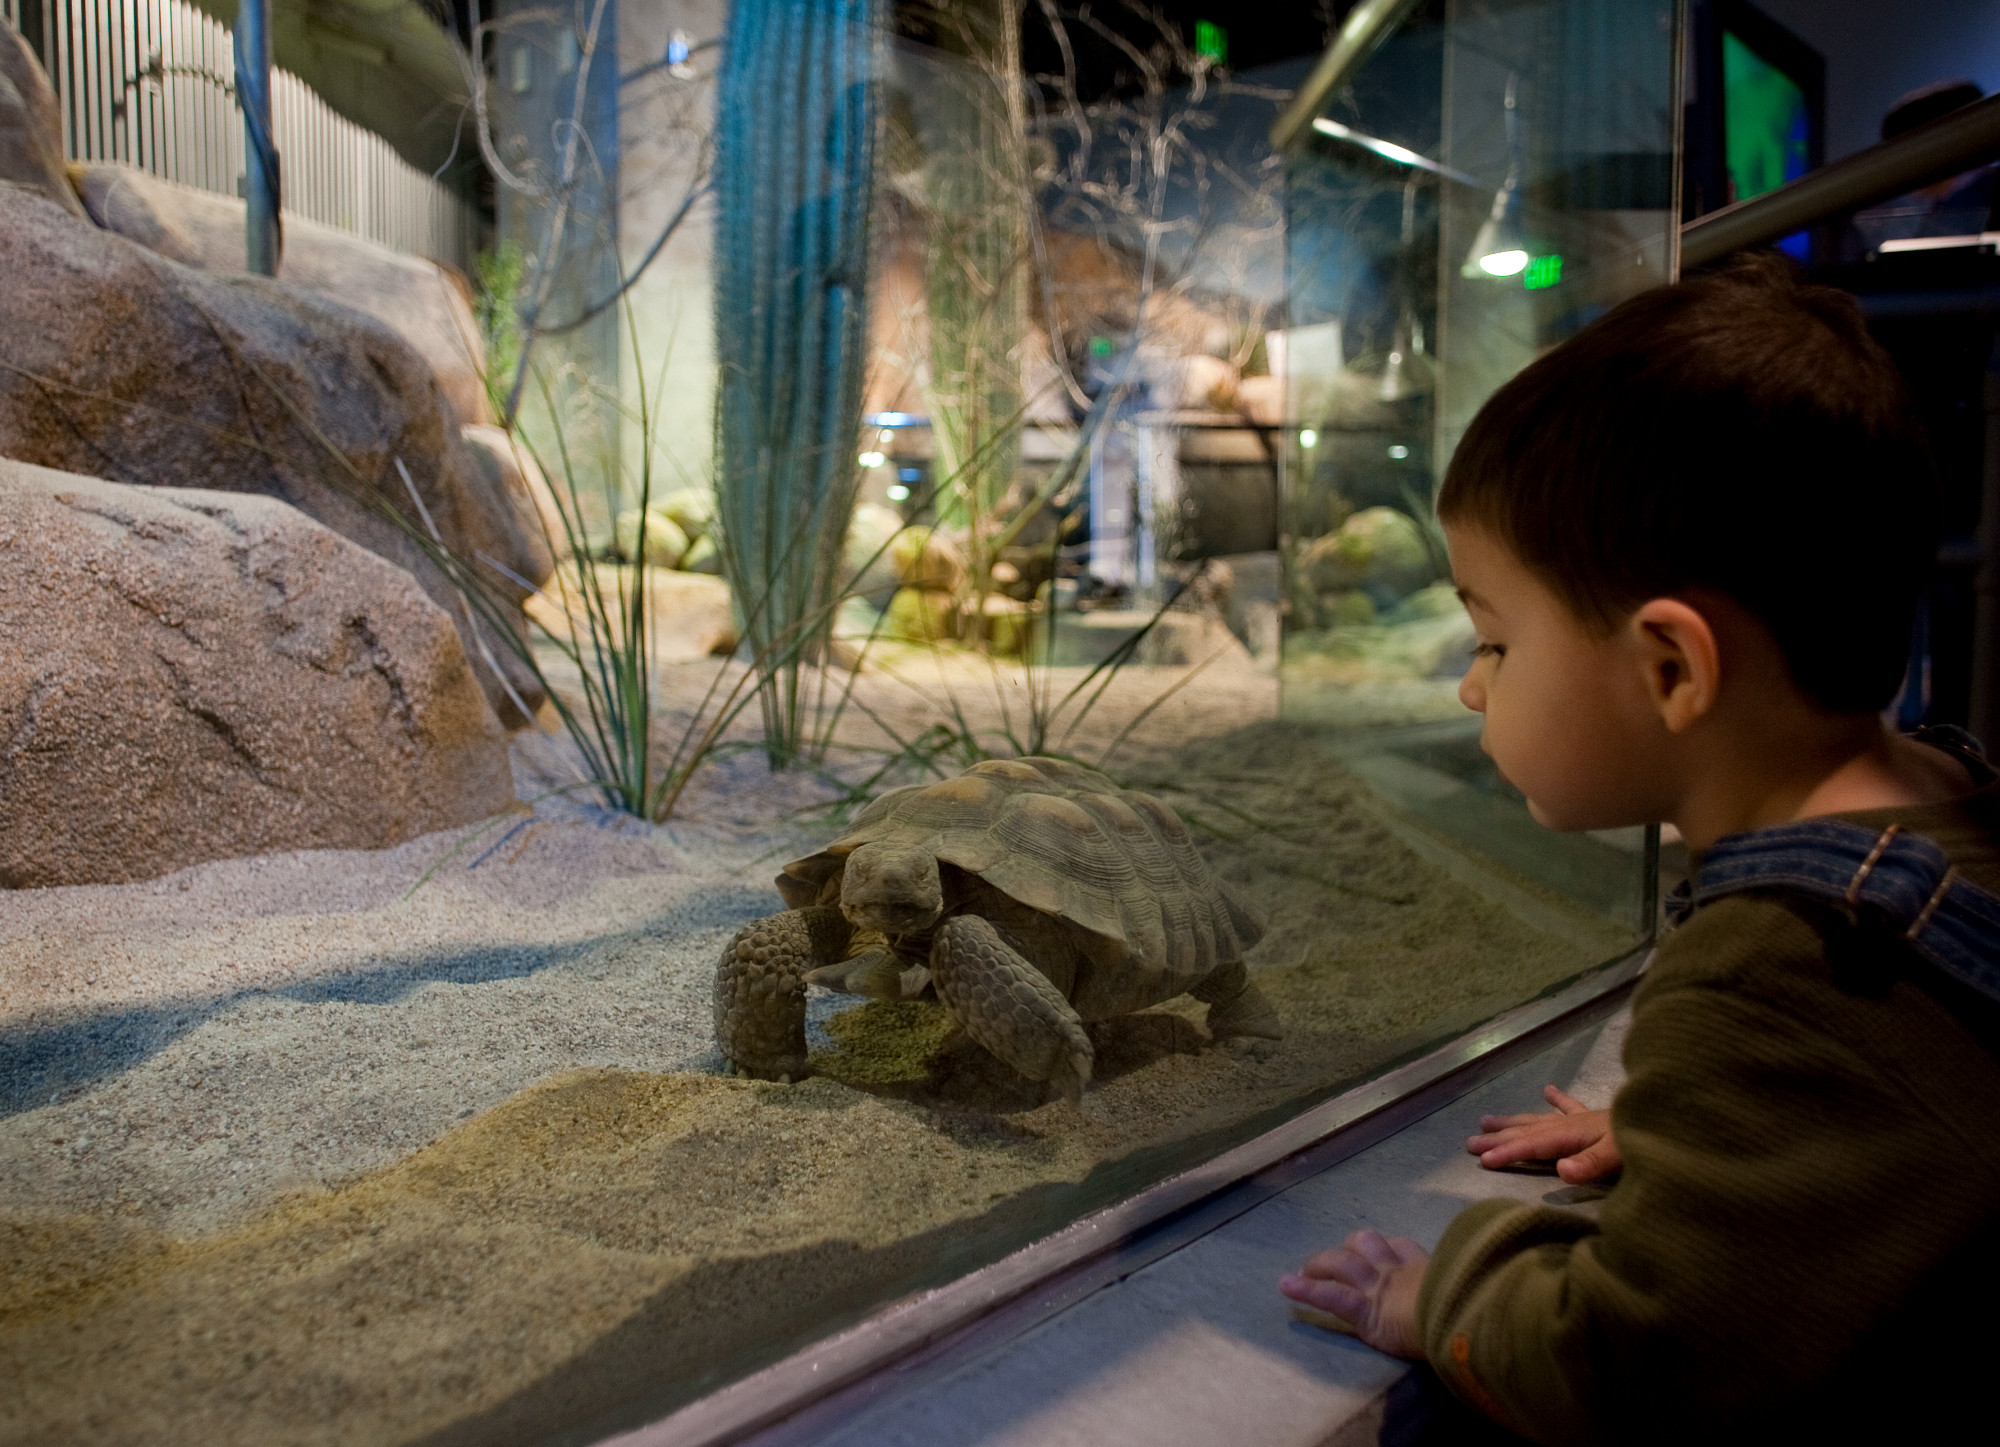 A young boy in Desert zone observes a desert tortoise walking through sand, through the glass exhibit wall